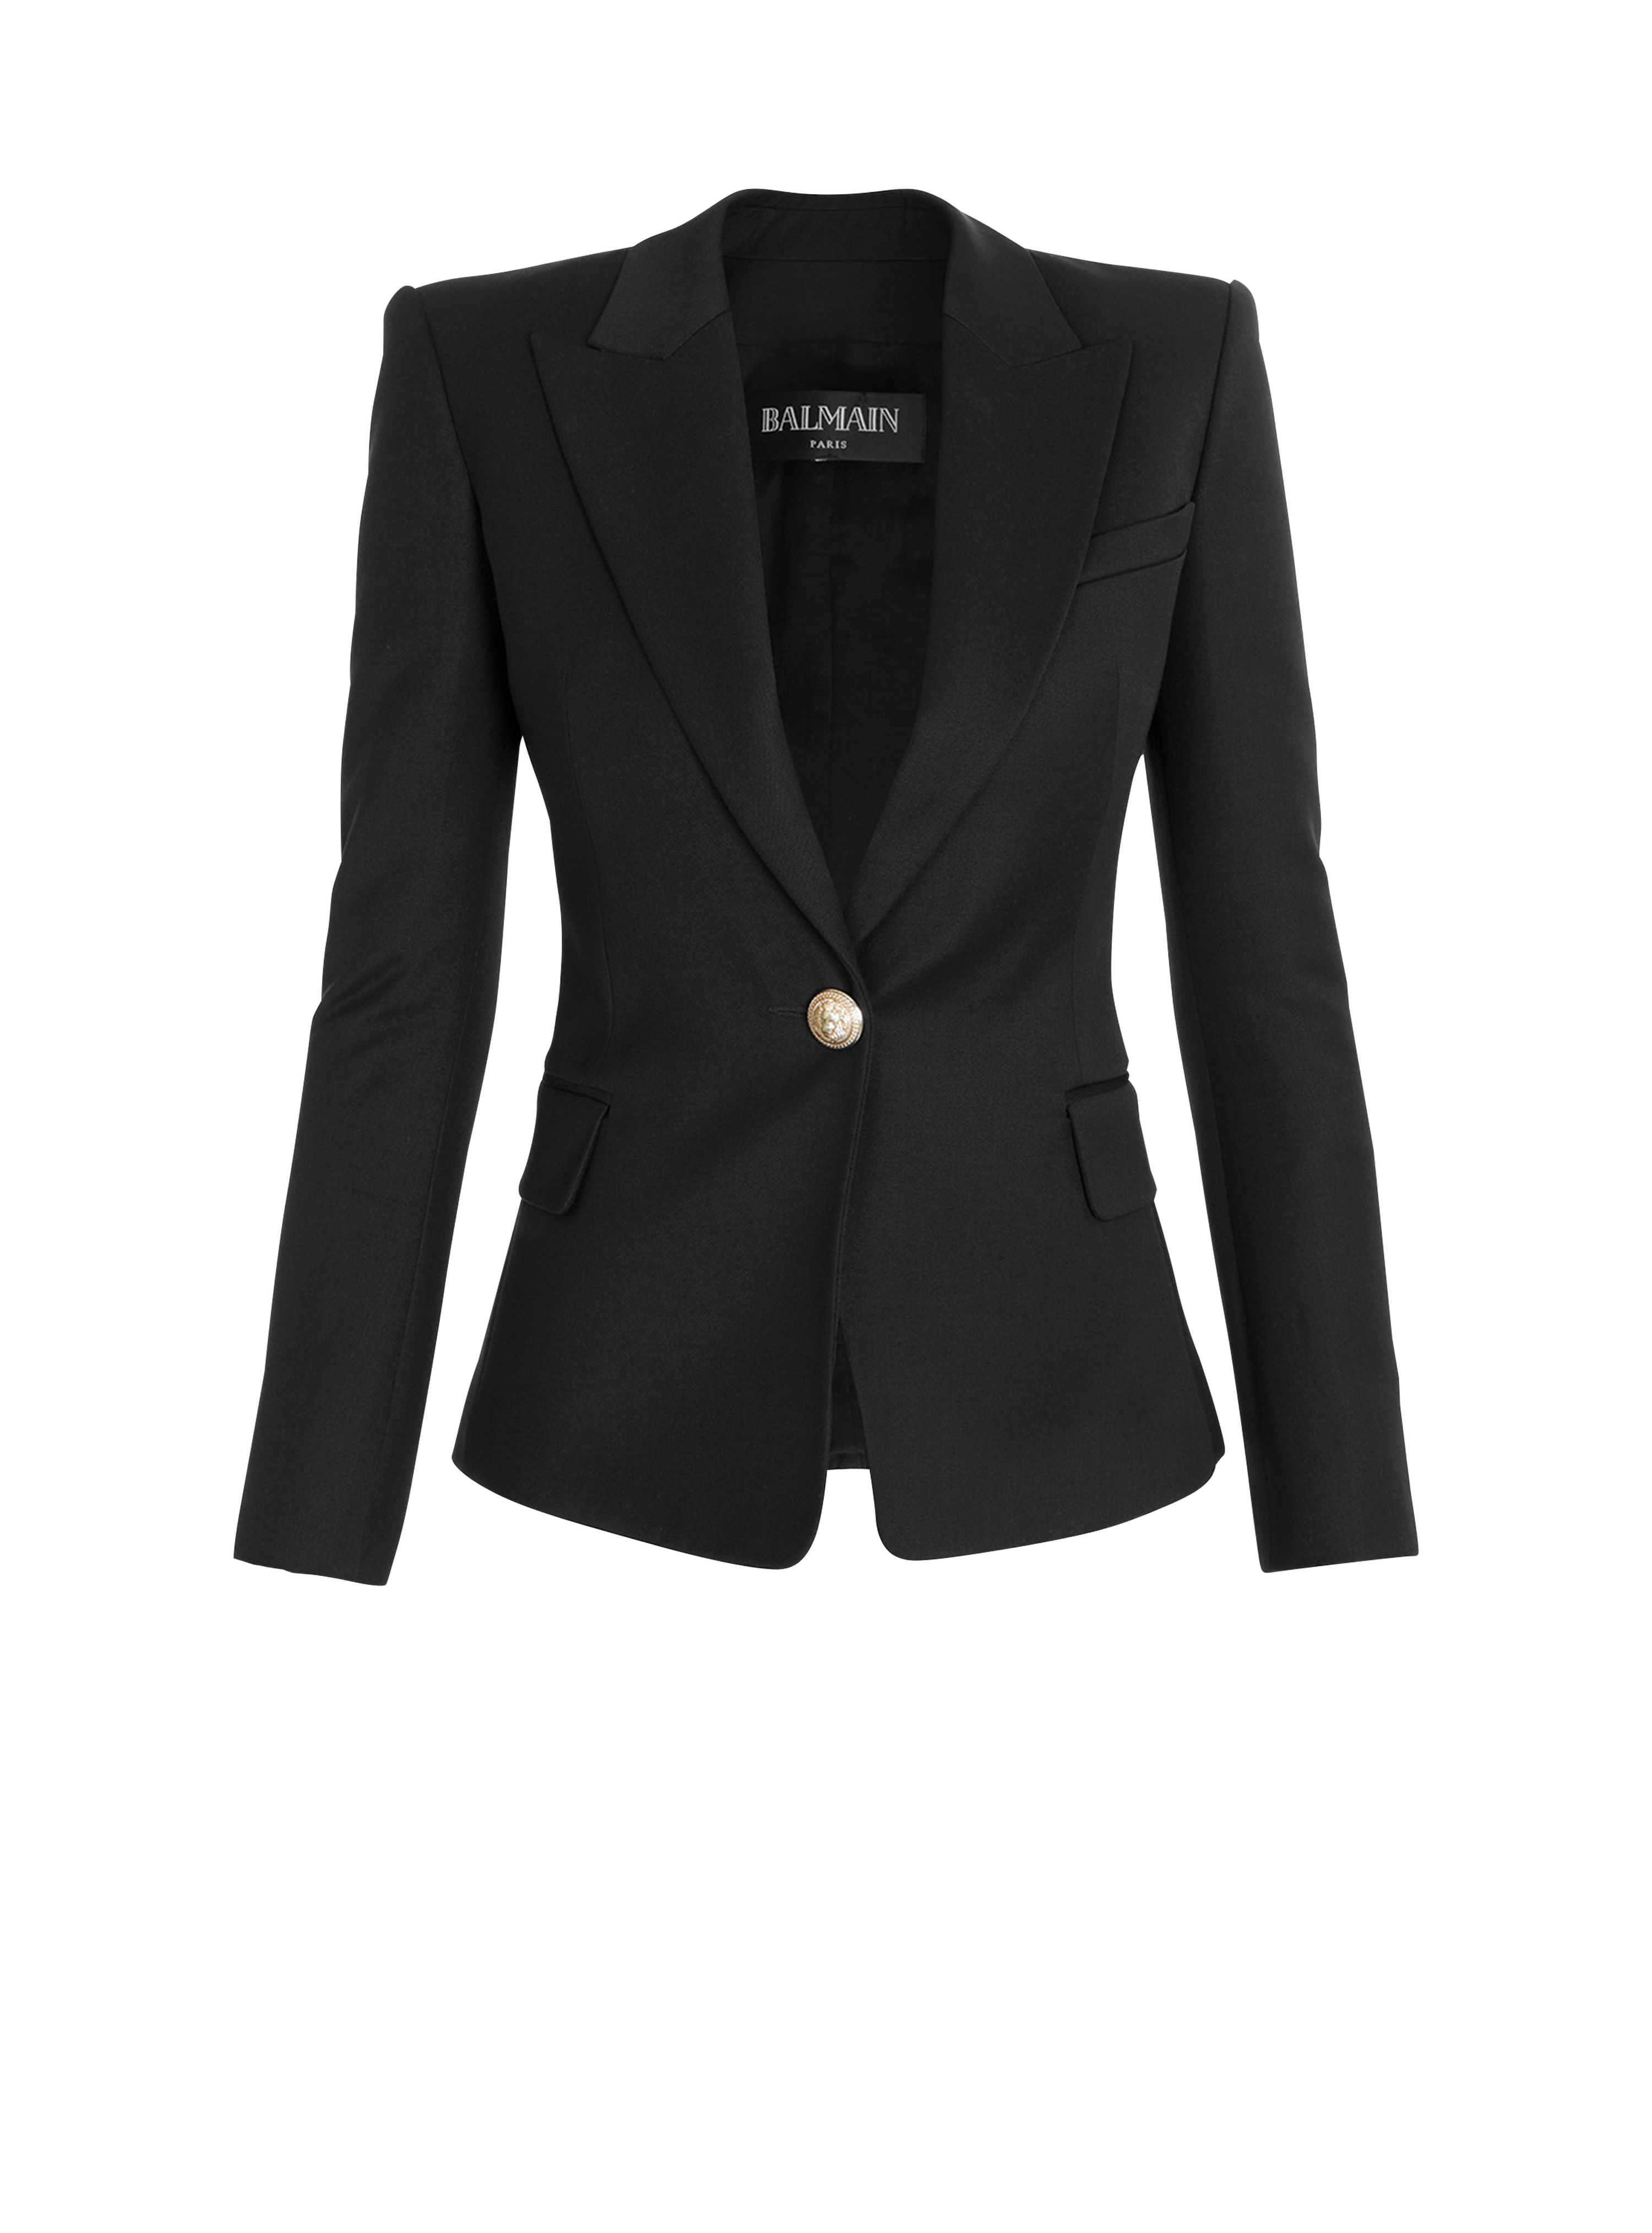 Wool single-button blazer, black, hi-res